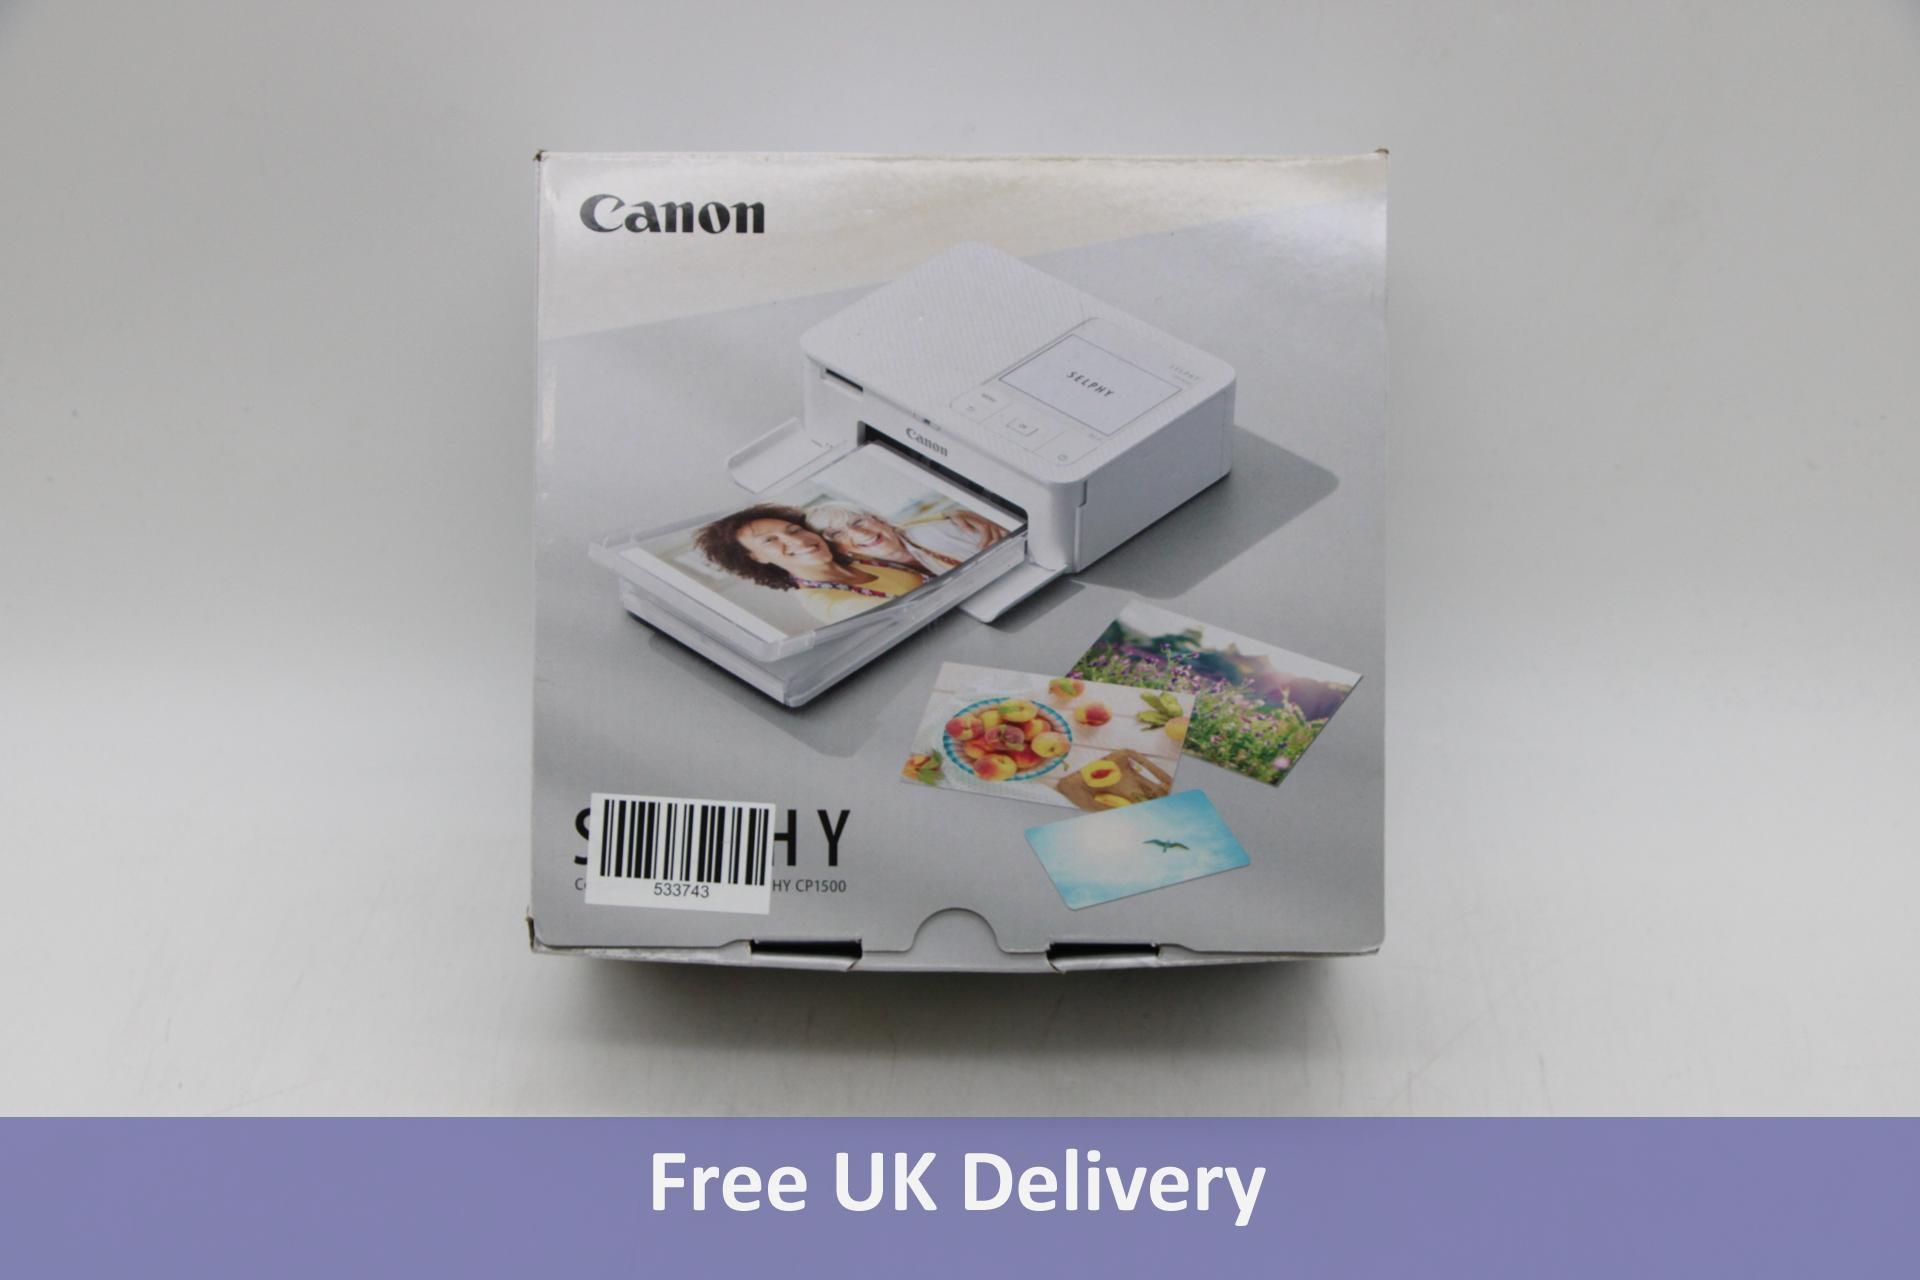 Canon Selphy CP1500 Compact Printer, White